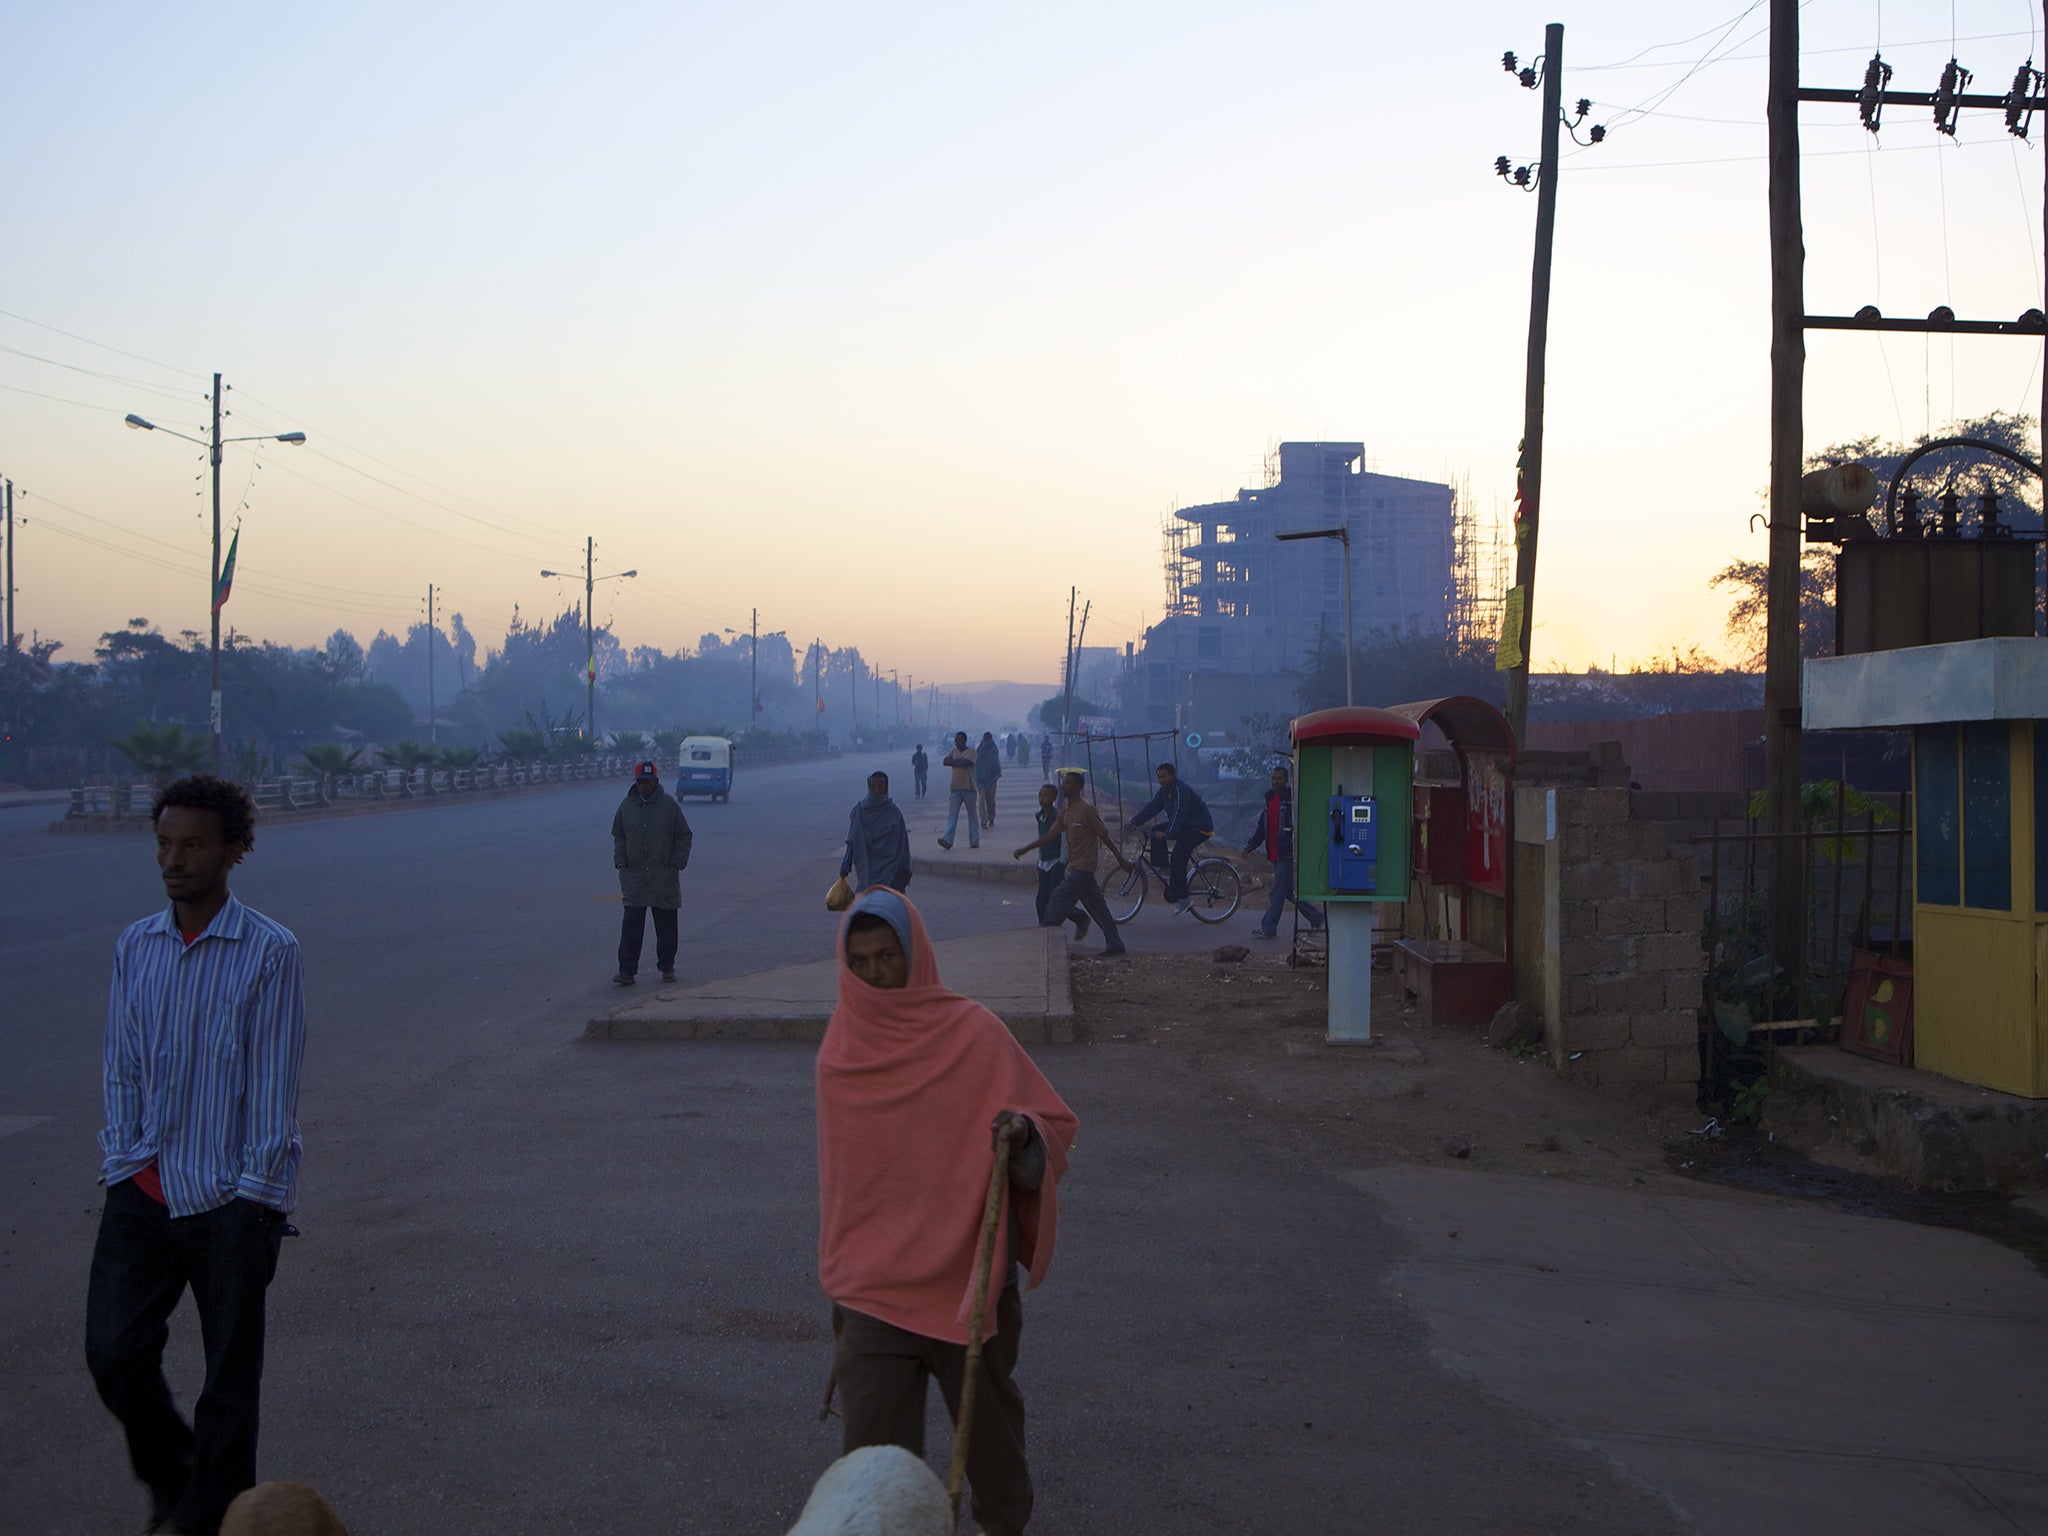 The shooting happened in the Ethiopian city of Bahir Dar